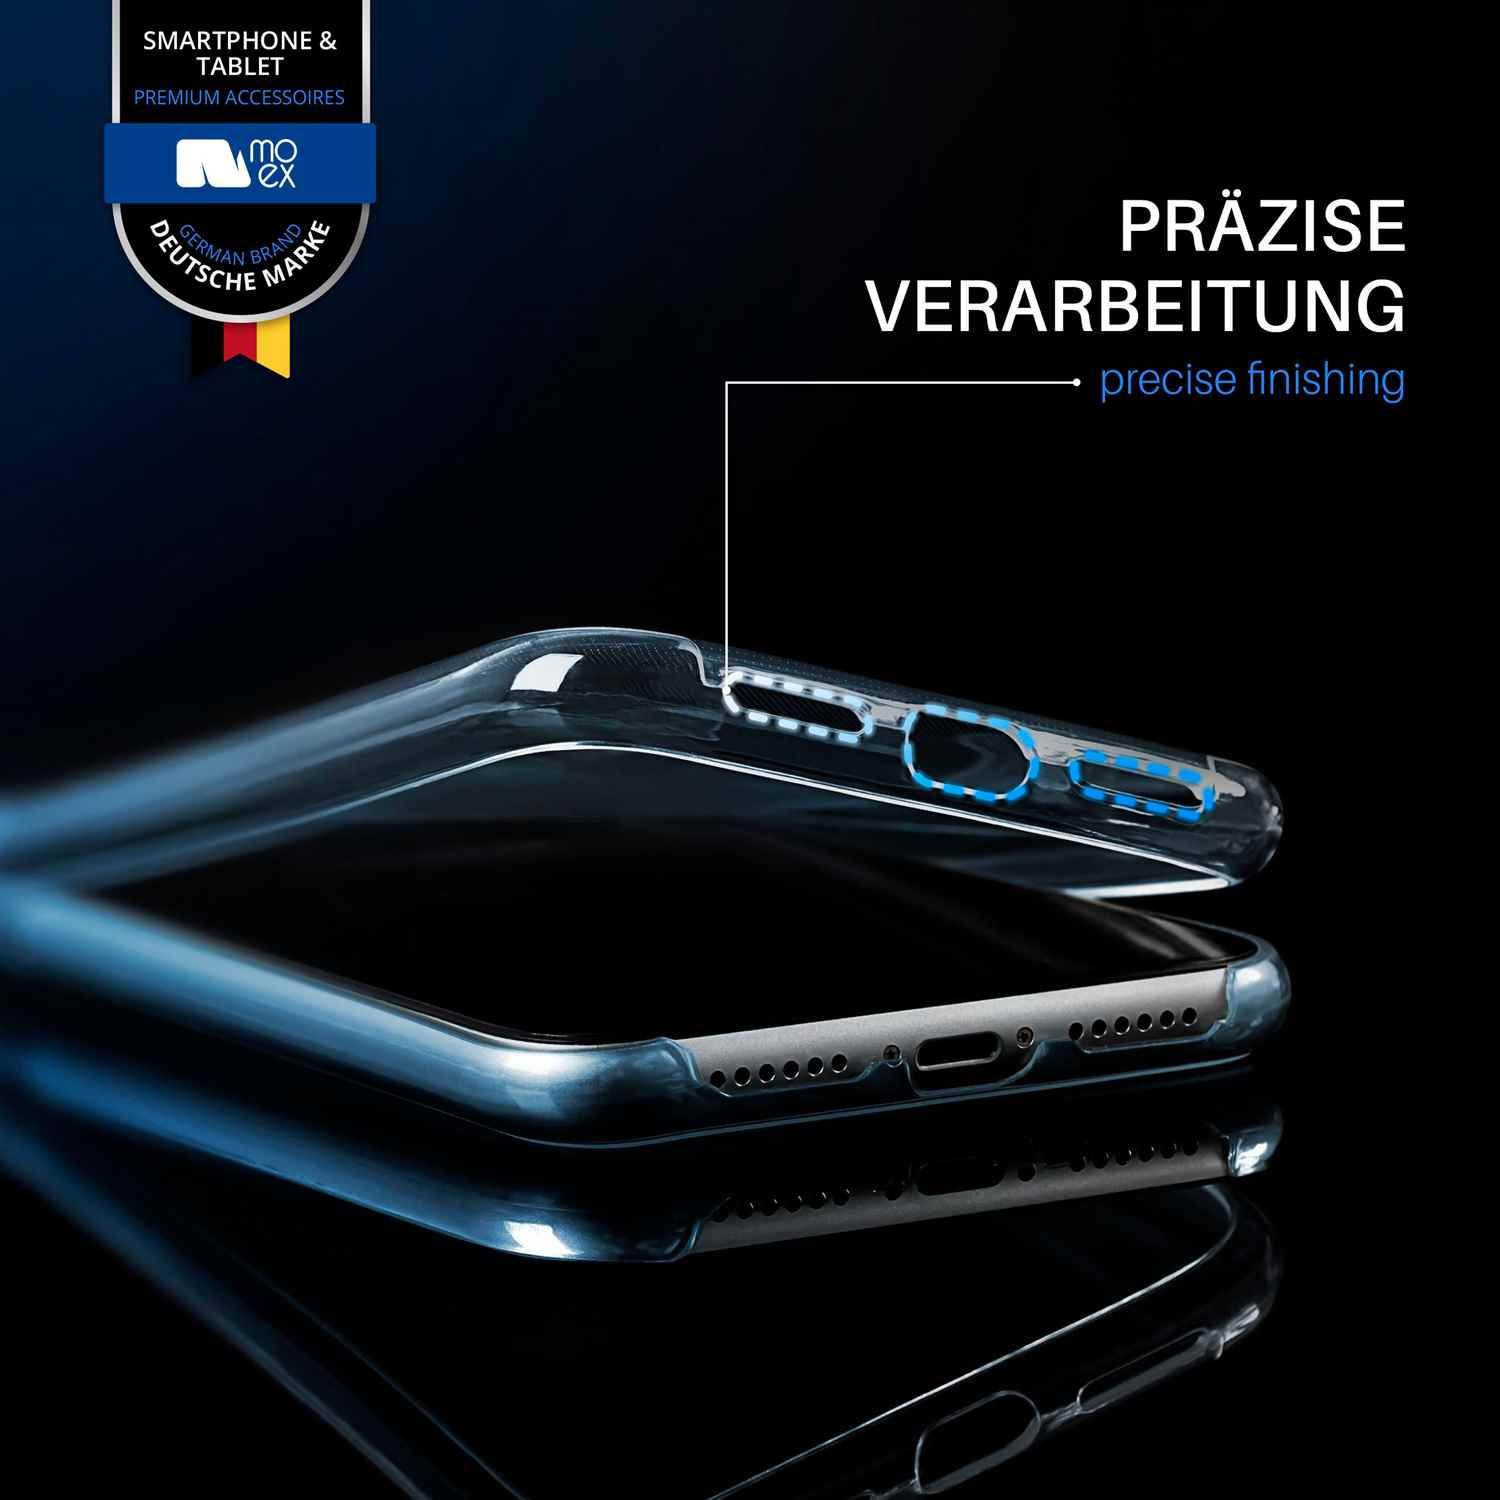 MOEX Double Case, Full Cover, S3 Samsung, Aqua Neo, Galaxy